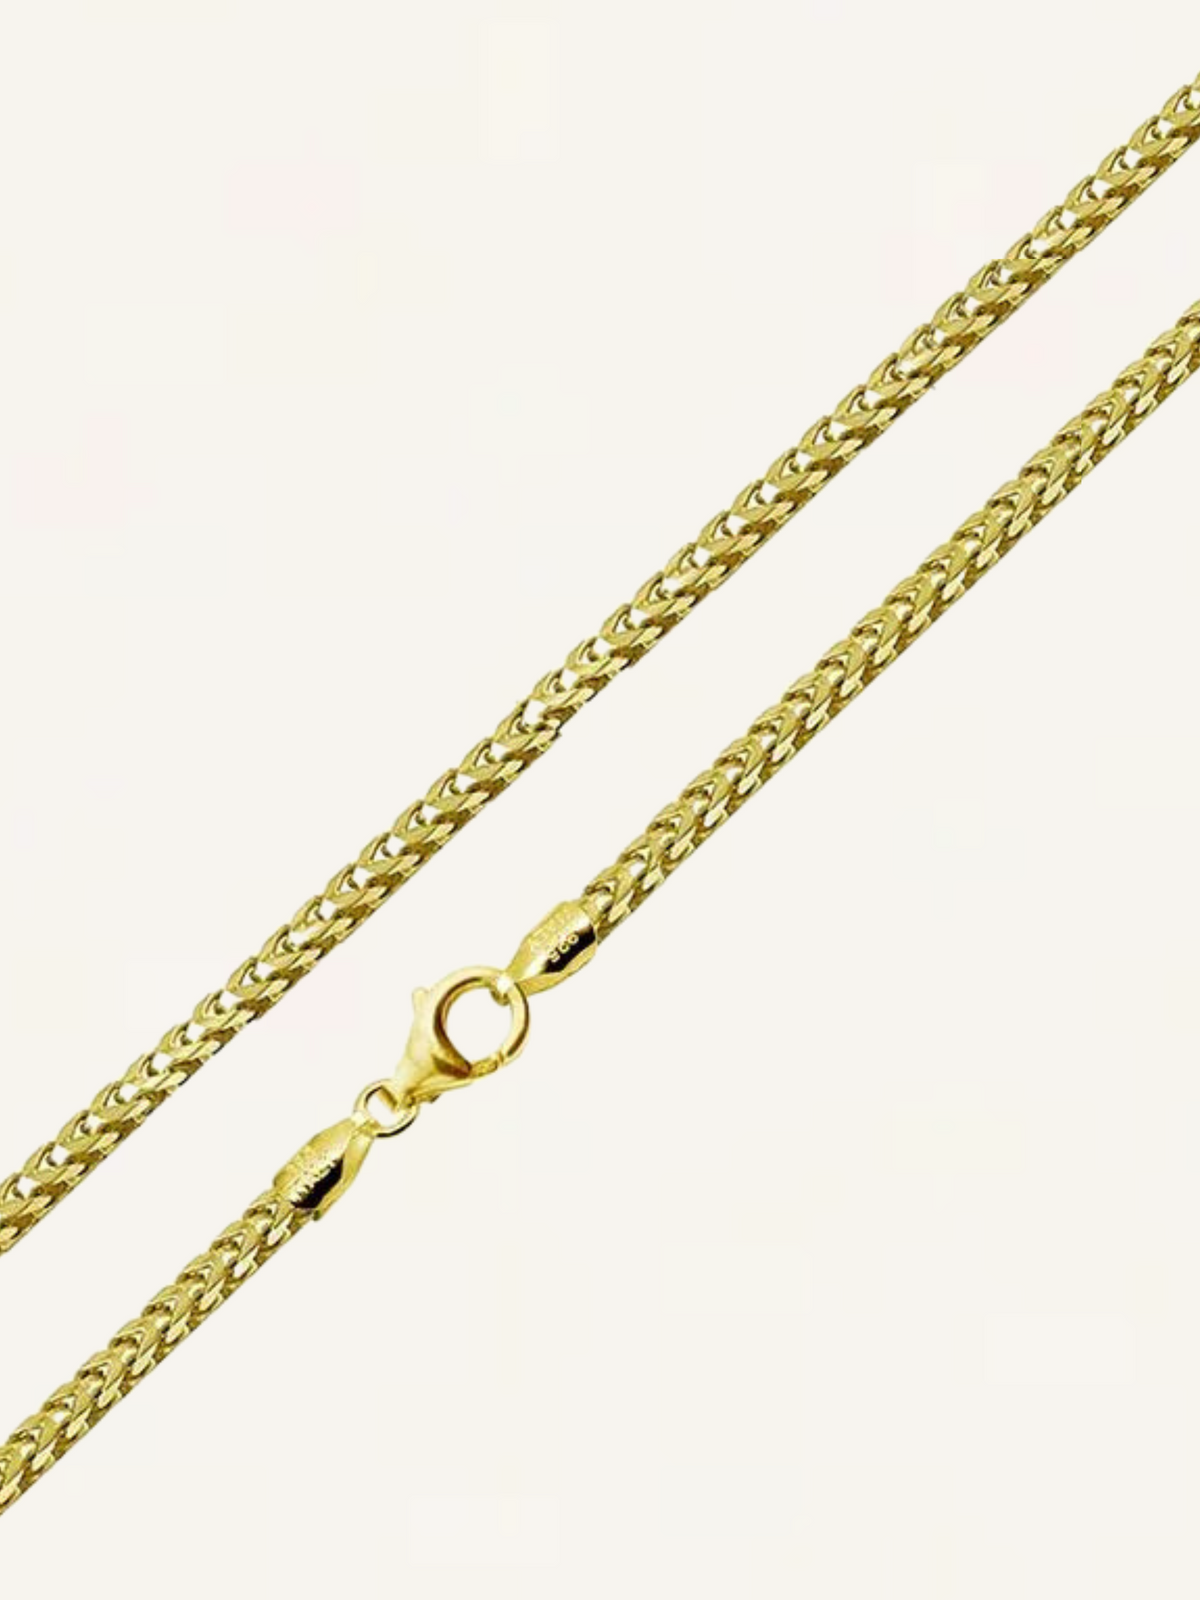 Franco Gold Chain